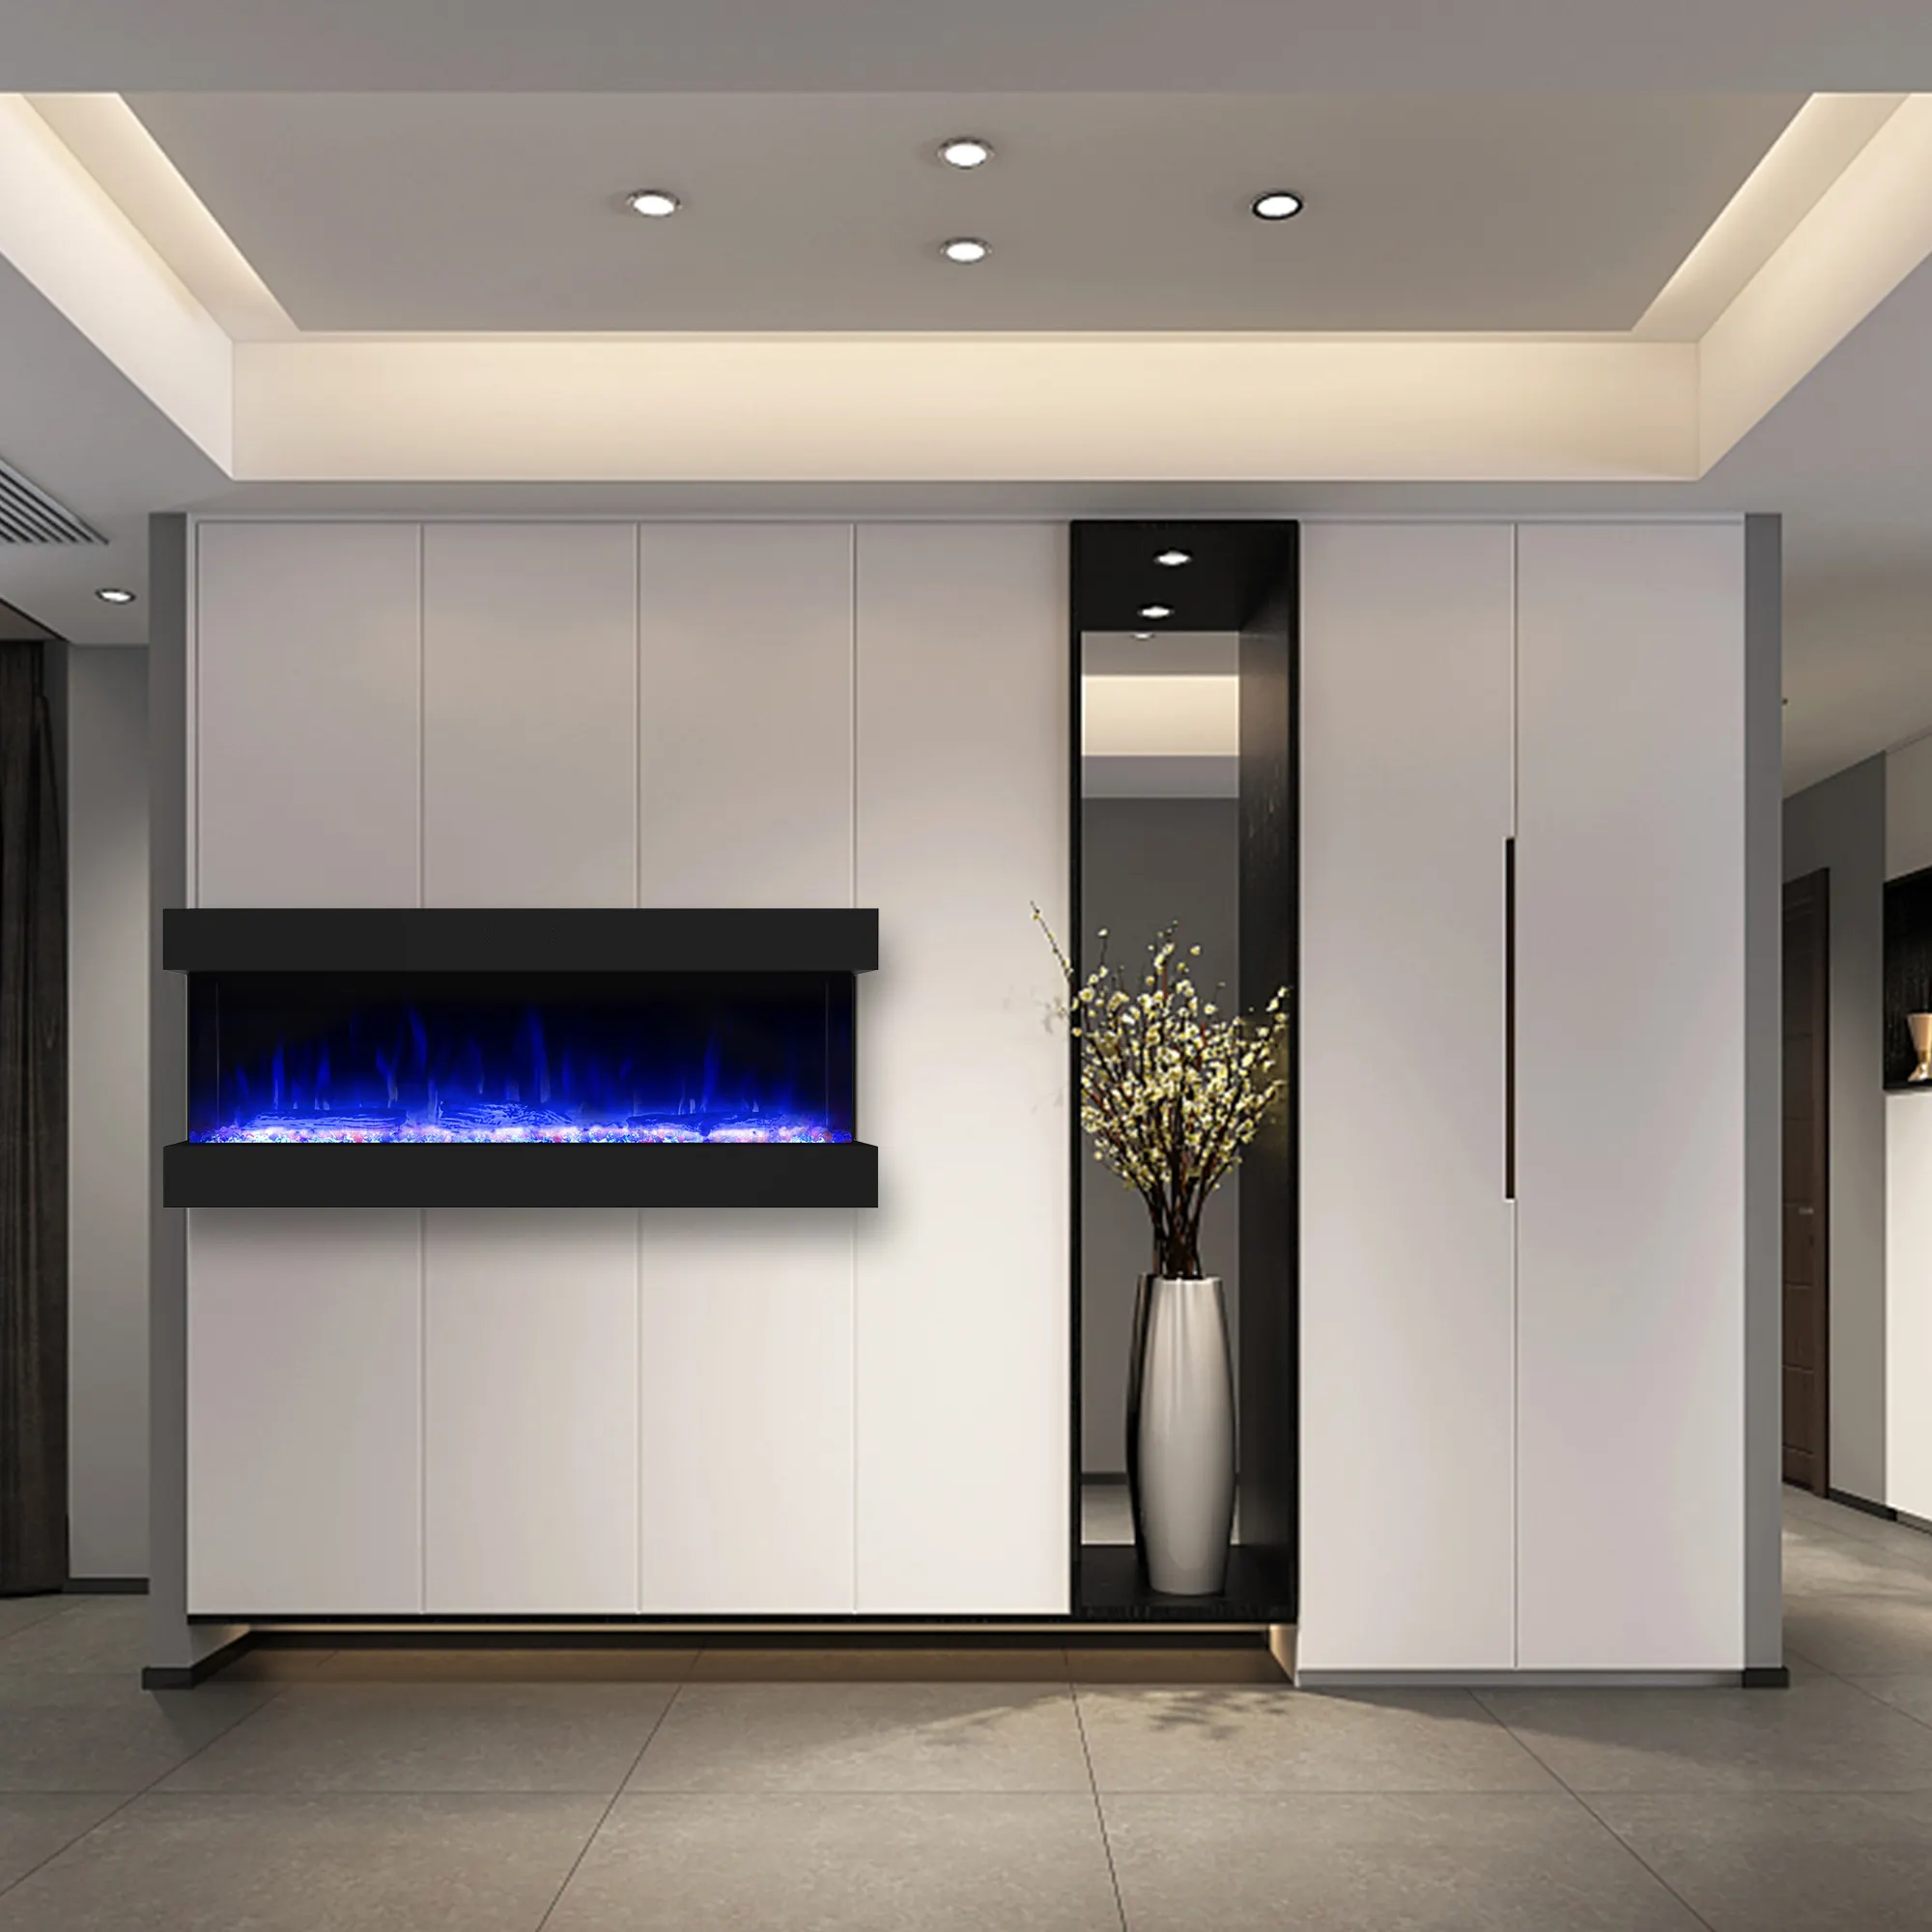 Luxstar 42 "モダンな装飾LED3面壁掛け式電気暖炉、熱暖炉電気ヒーター屋内